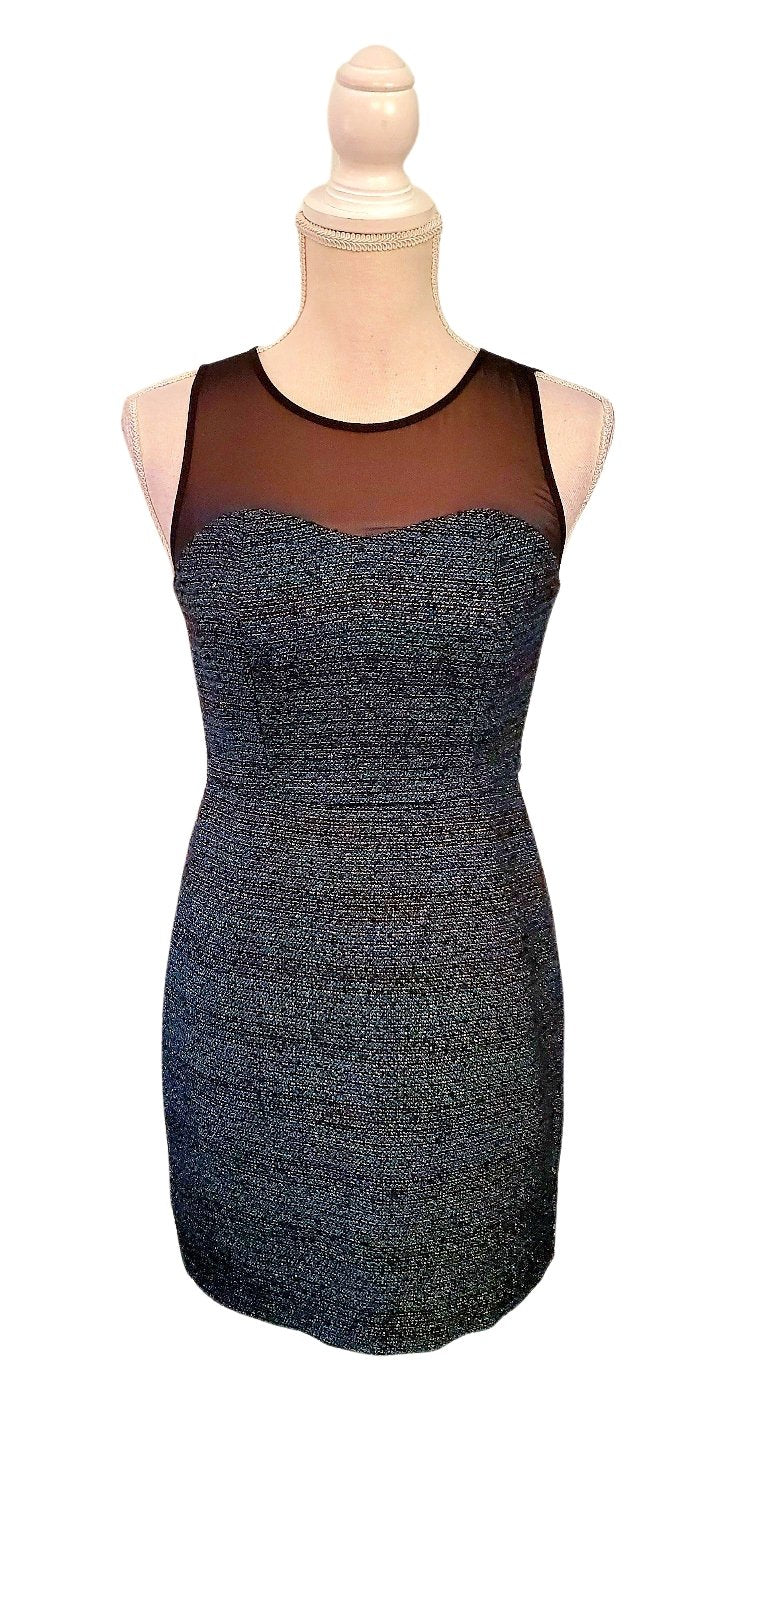 Sleeveless Mesh Bodice Sparkly Holiday Dress Size 2P